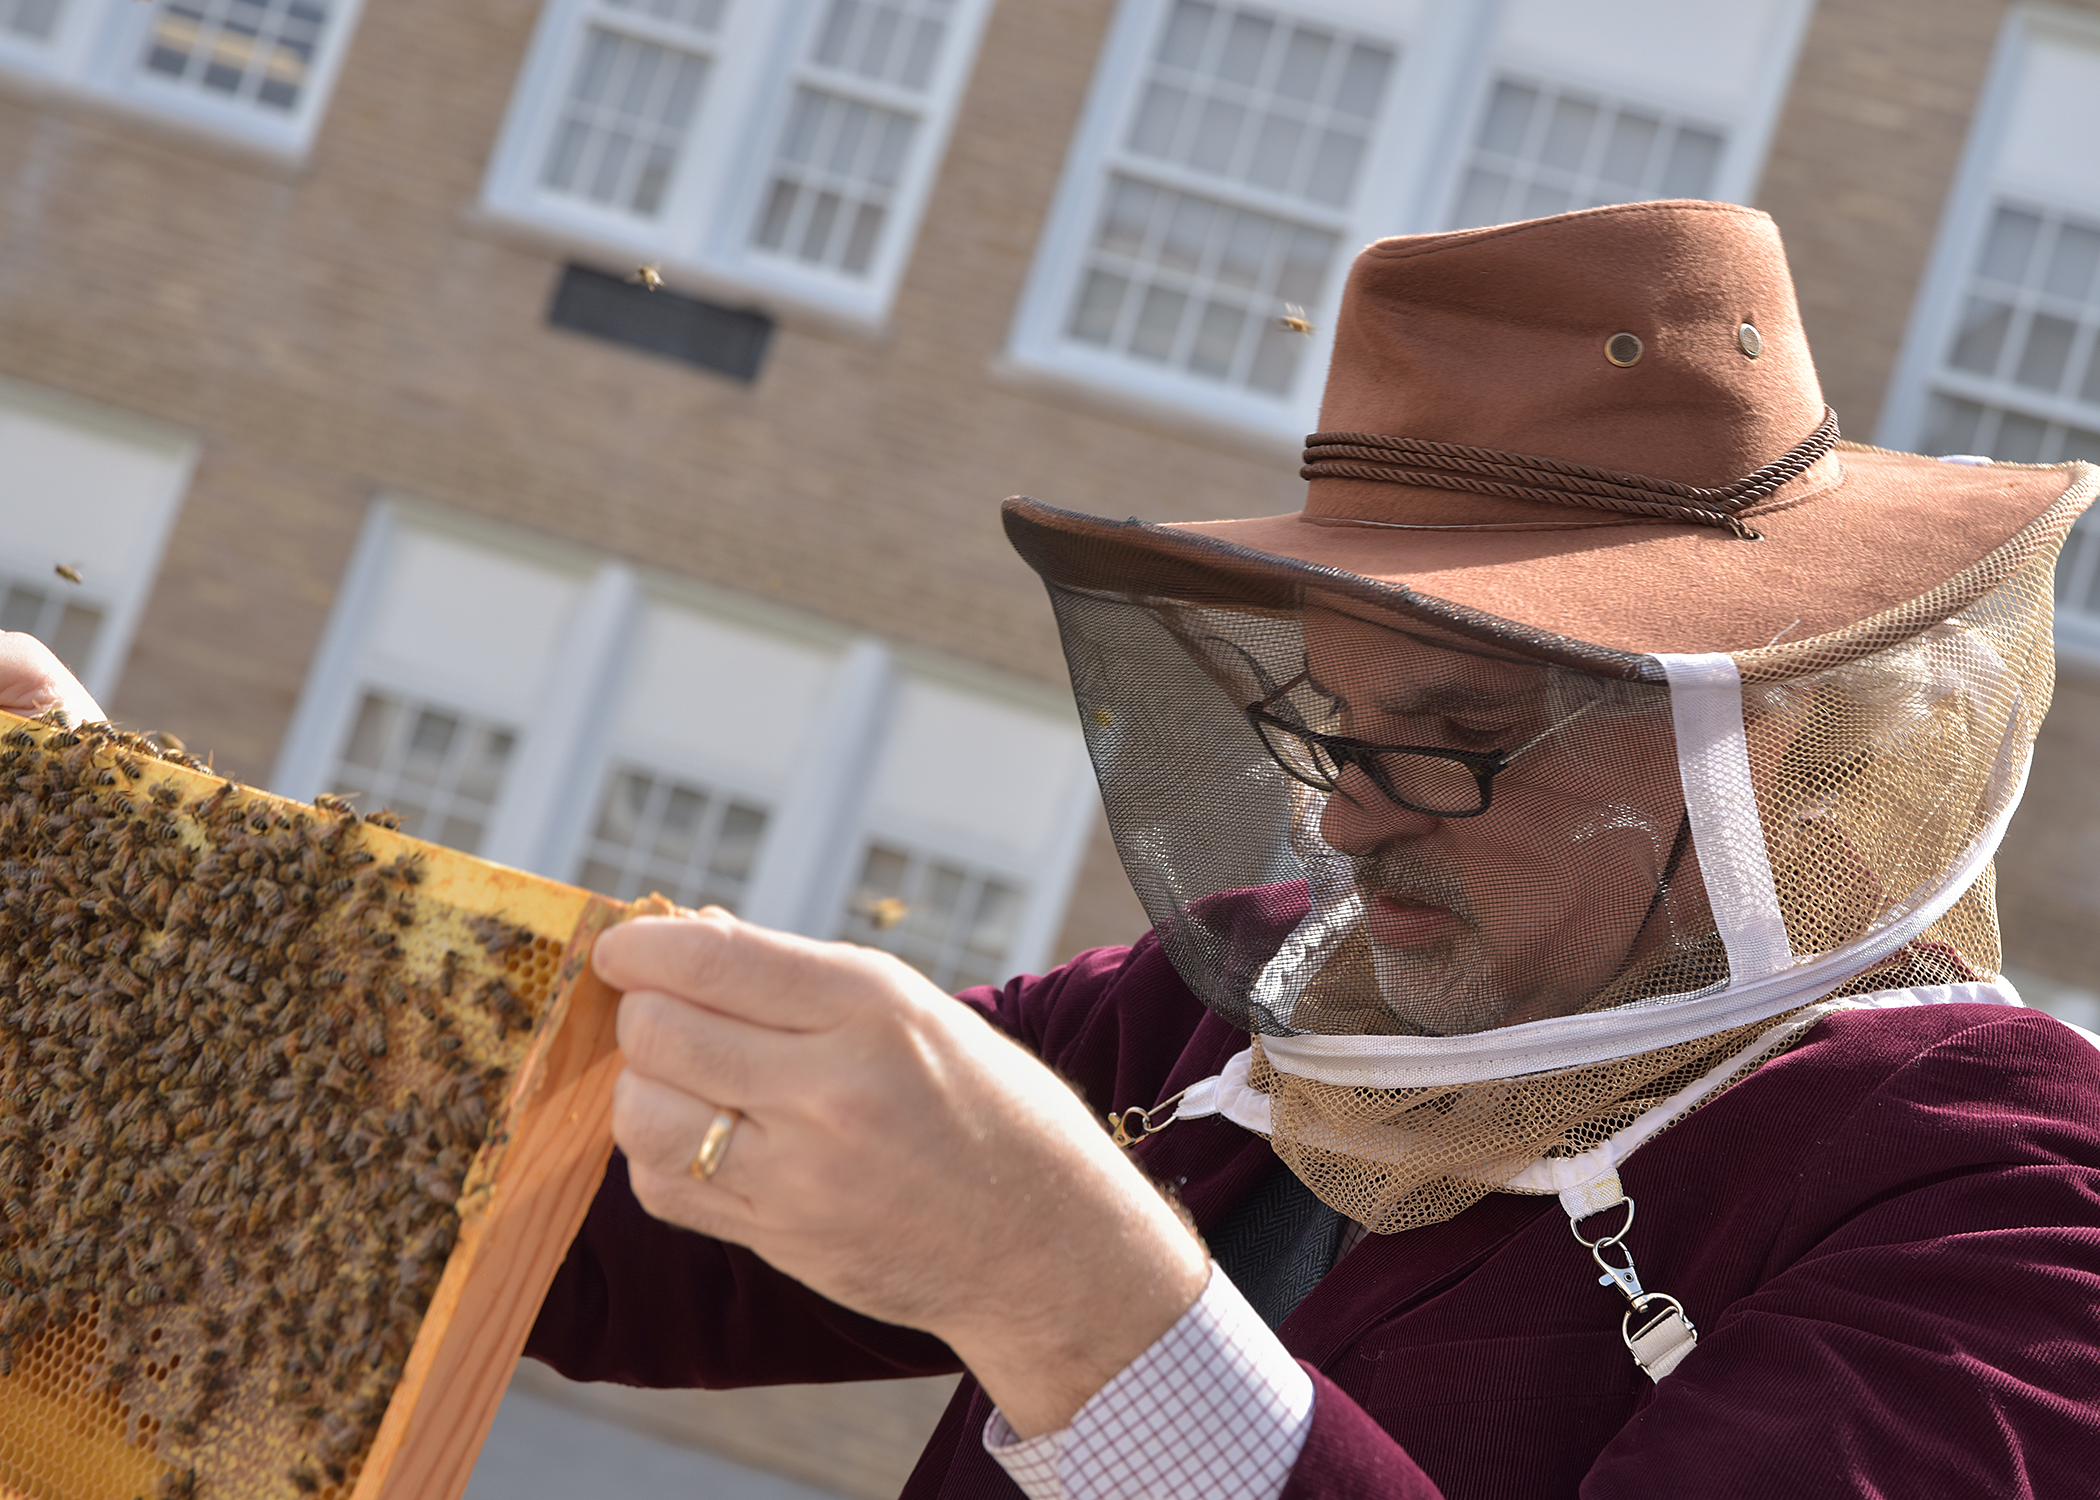 Tim Martin tending bee hives